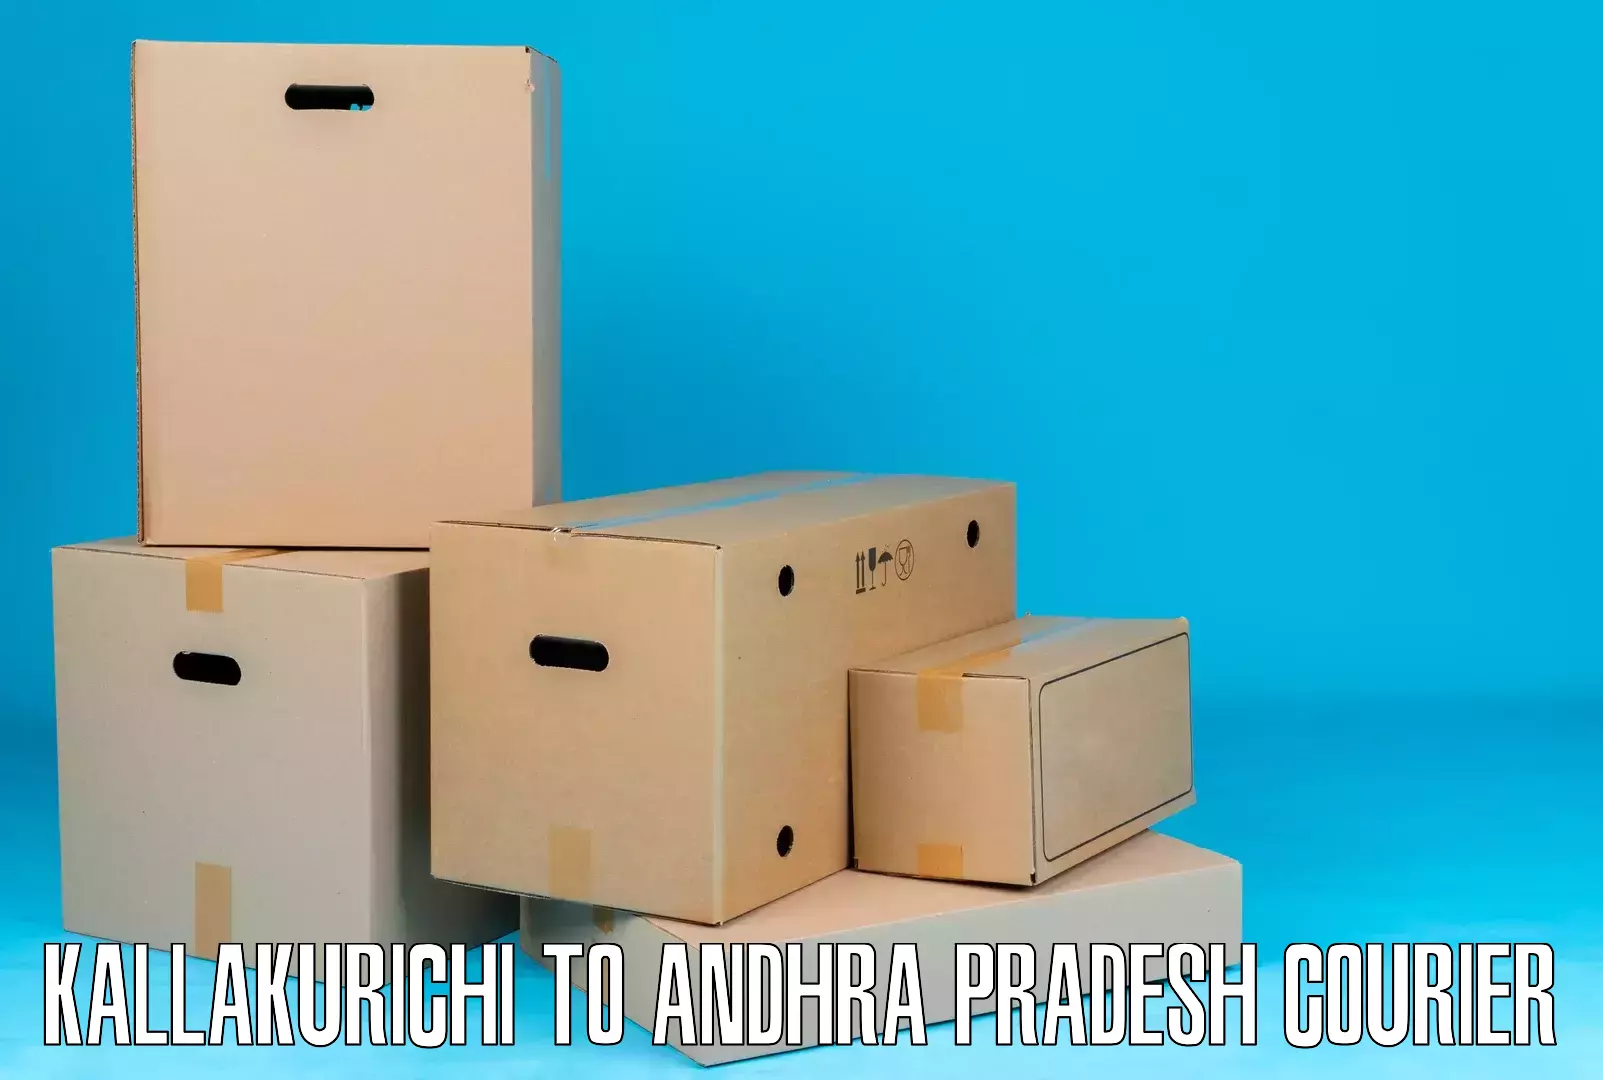 Modern delivery technologies Kallakurichi to Tirupati